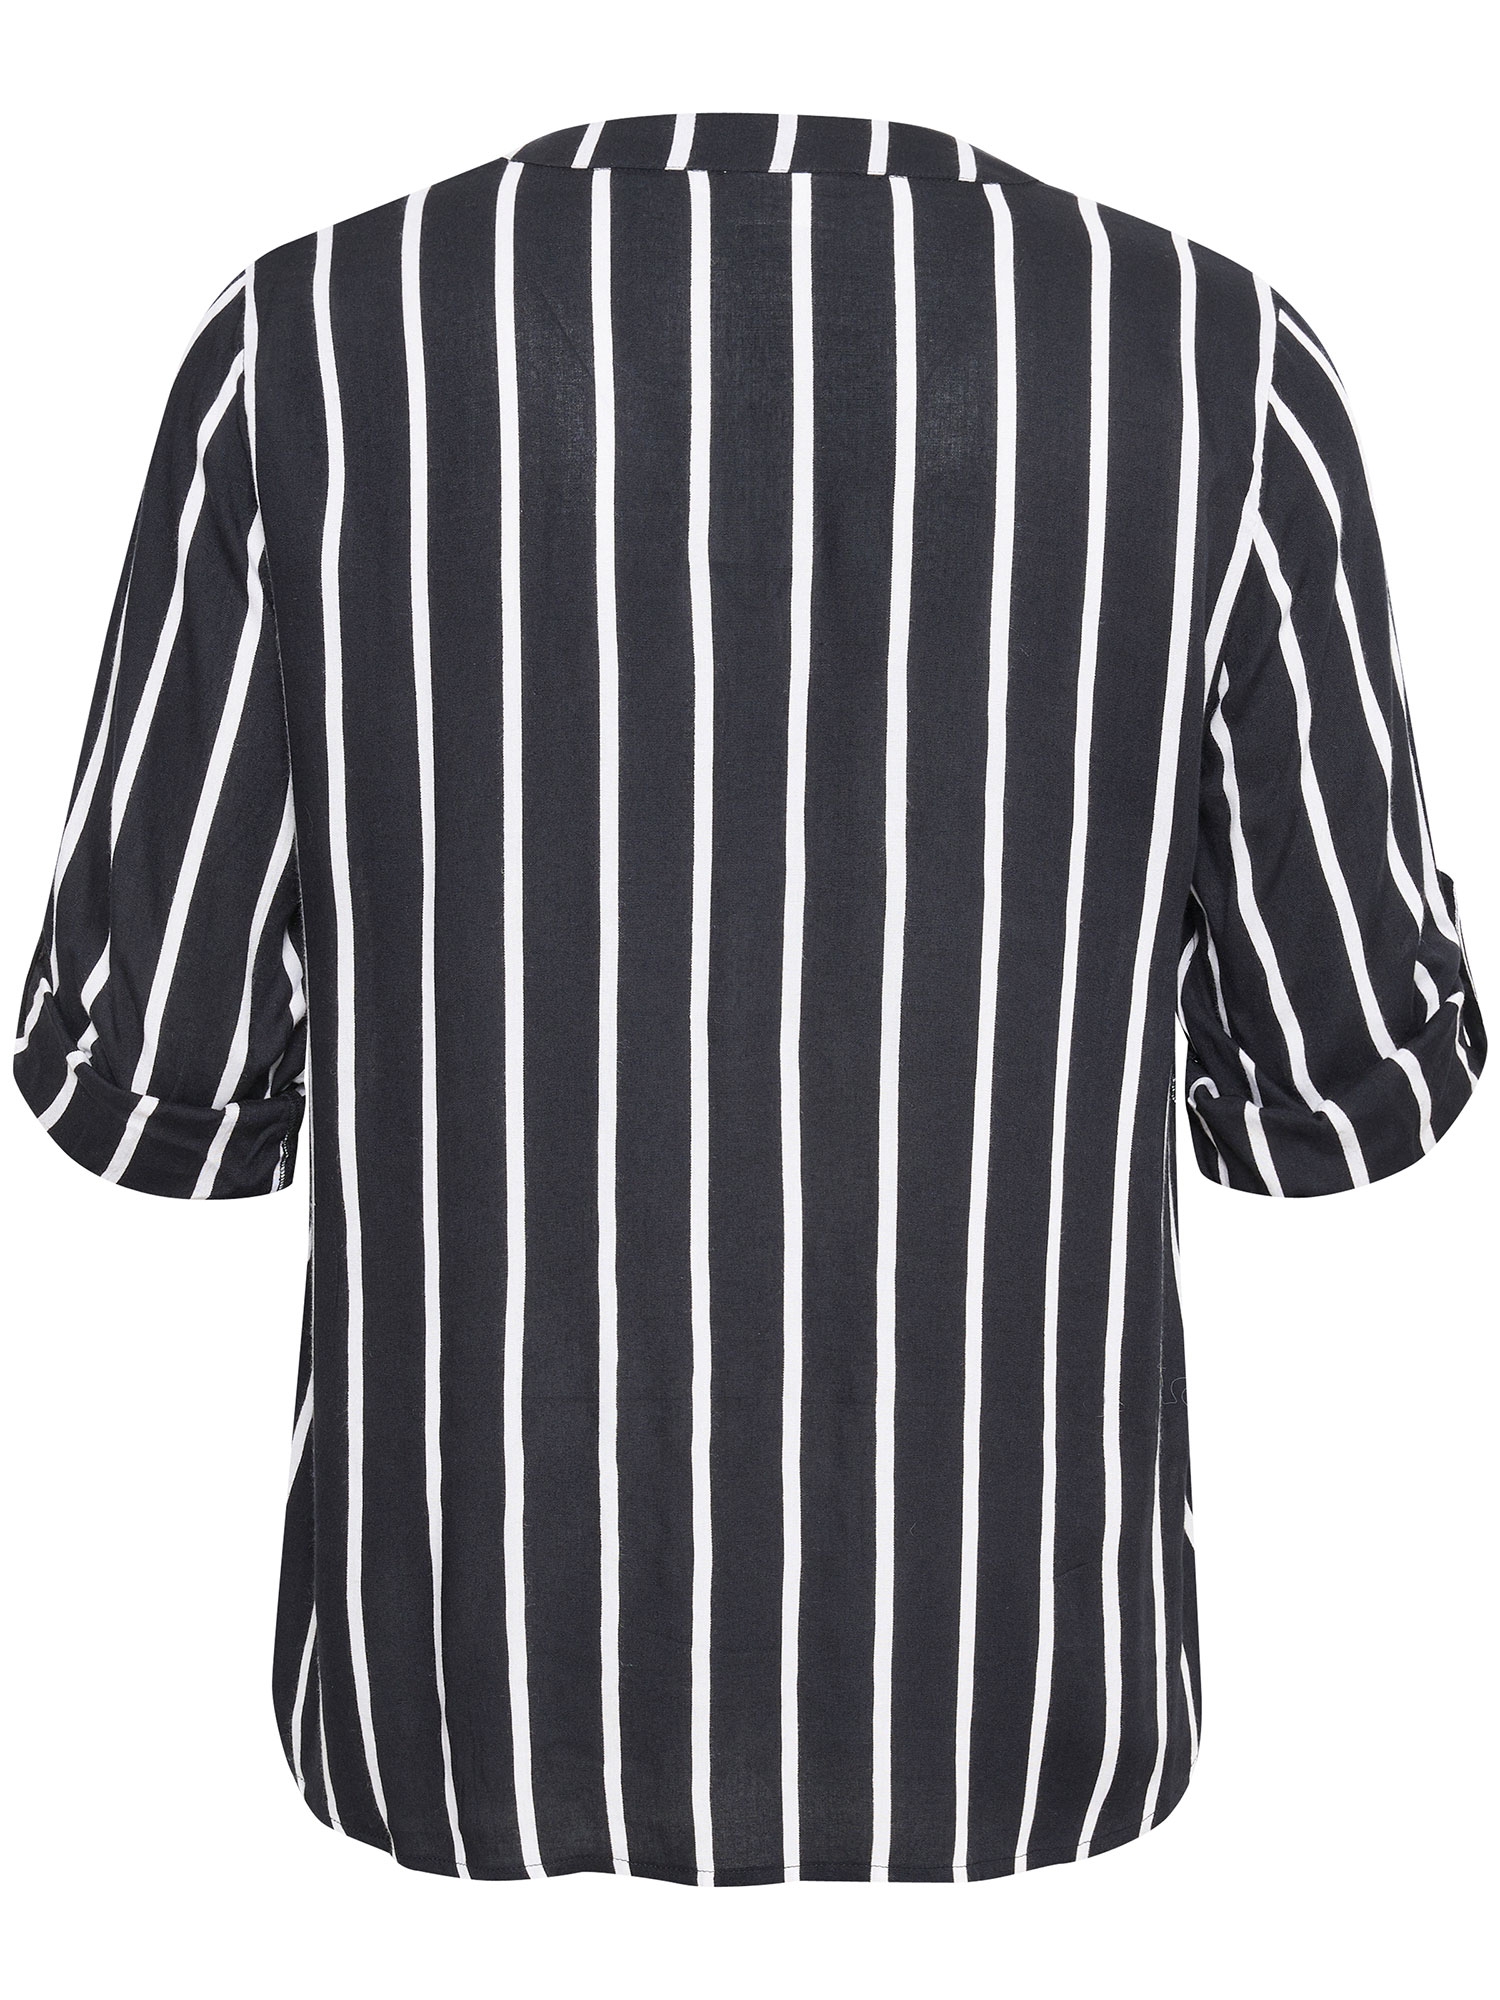 KC Sida - Viskoseskjorte med klassiske svarte og hvite striper fra Kaffe Curve